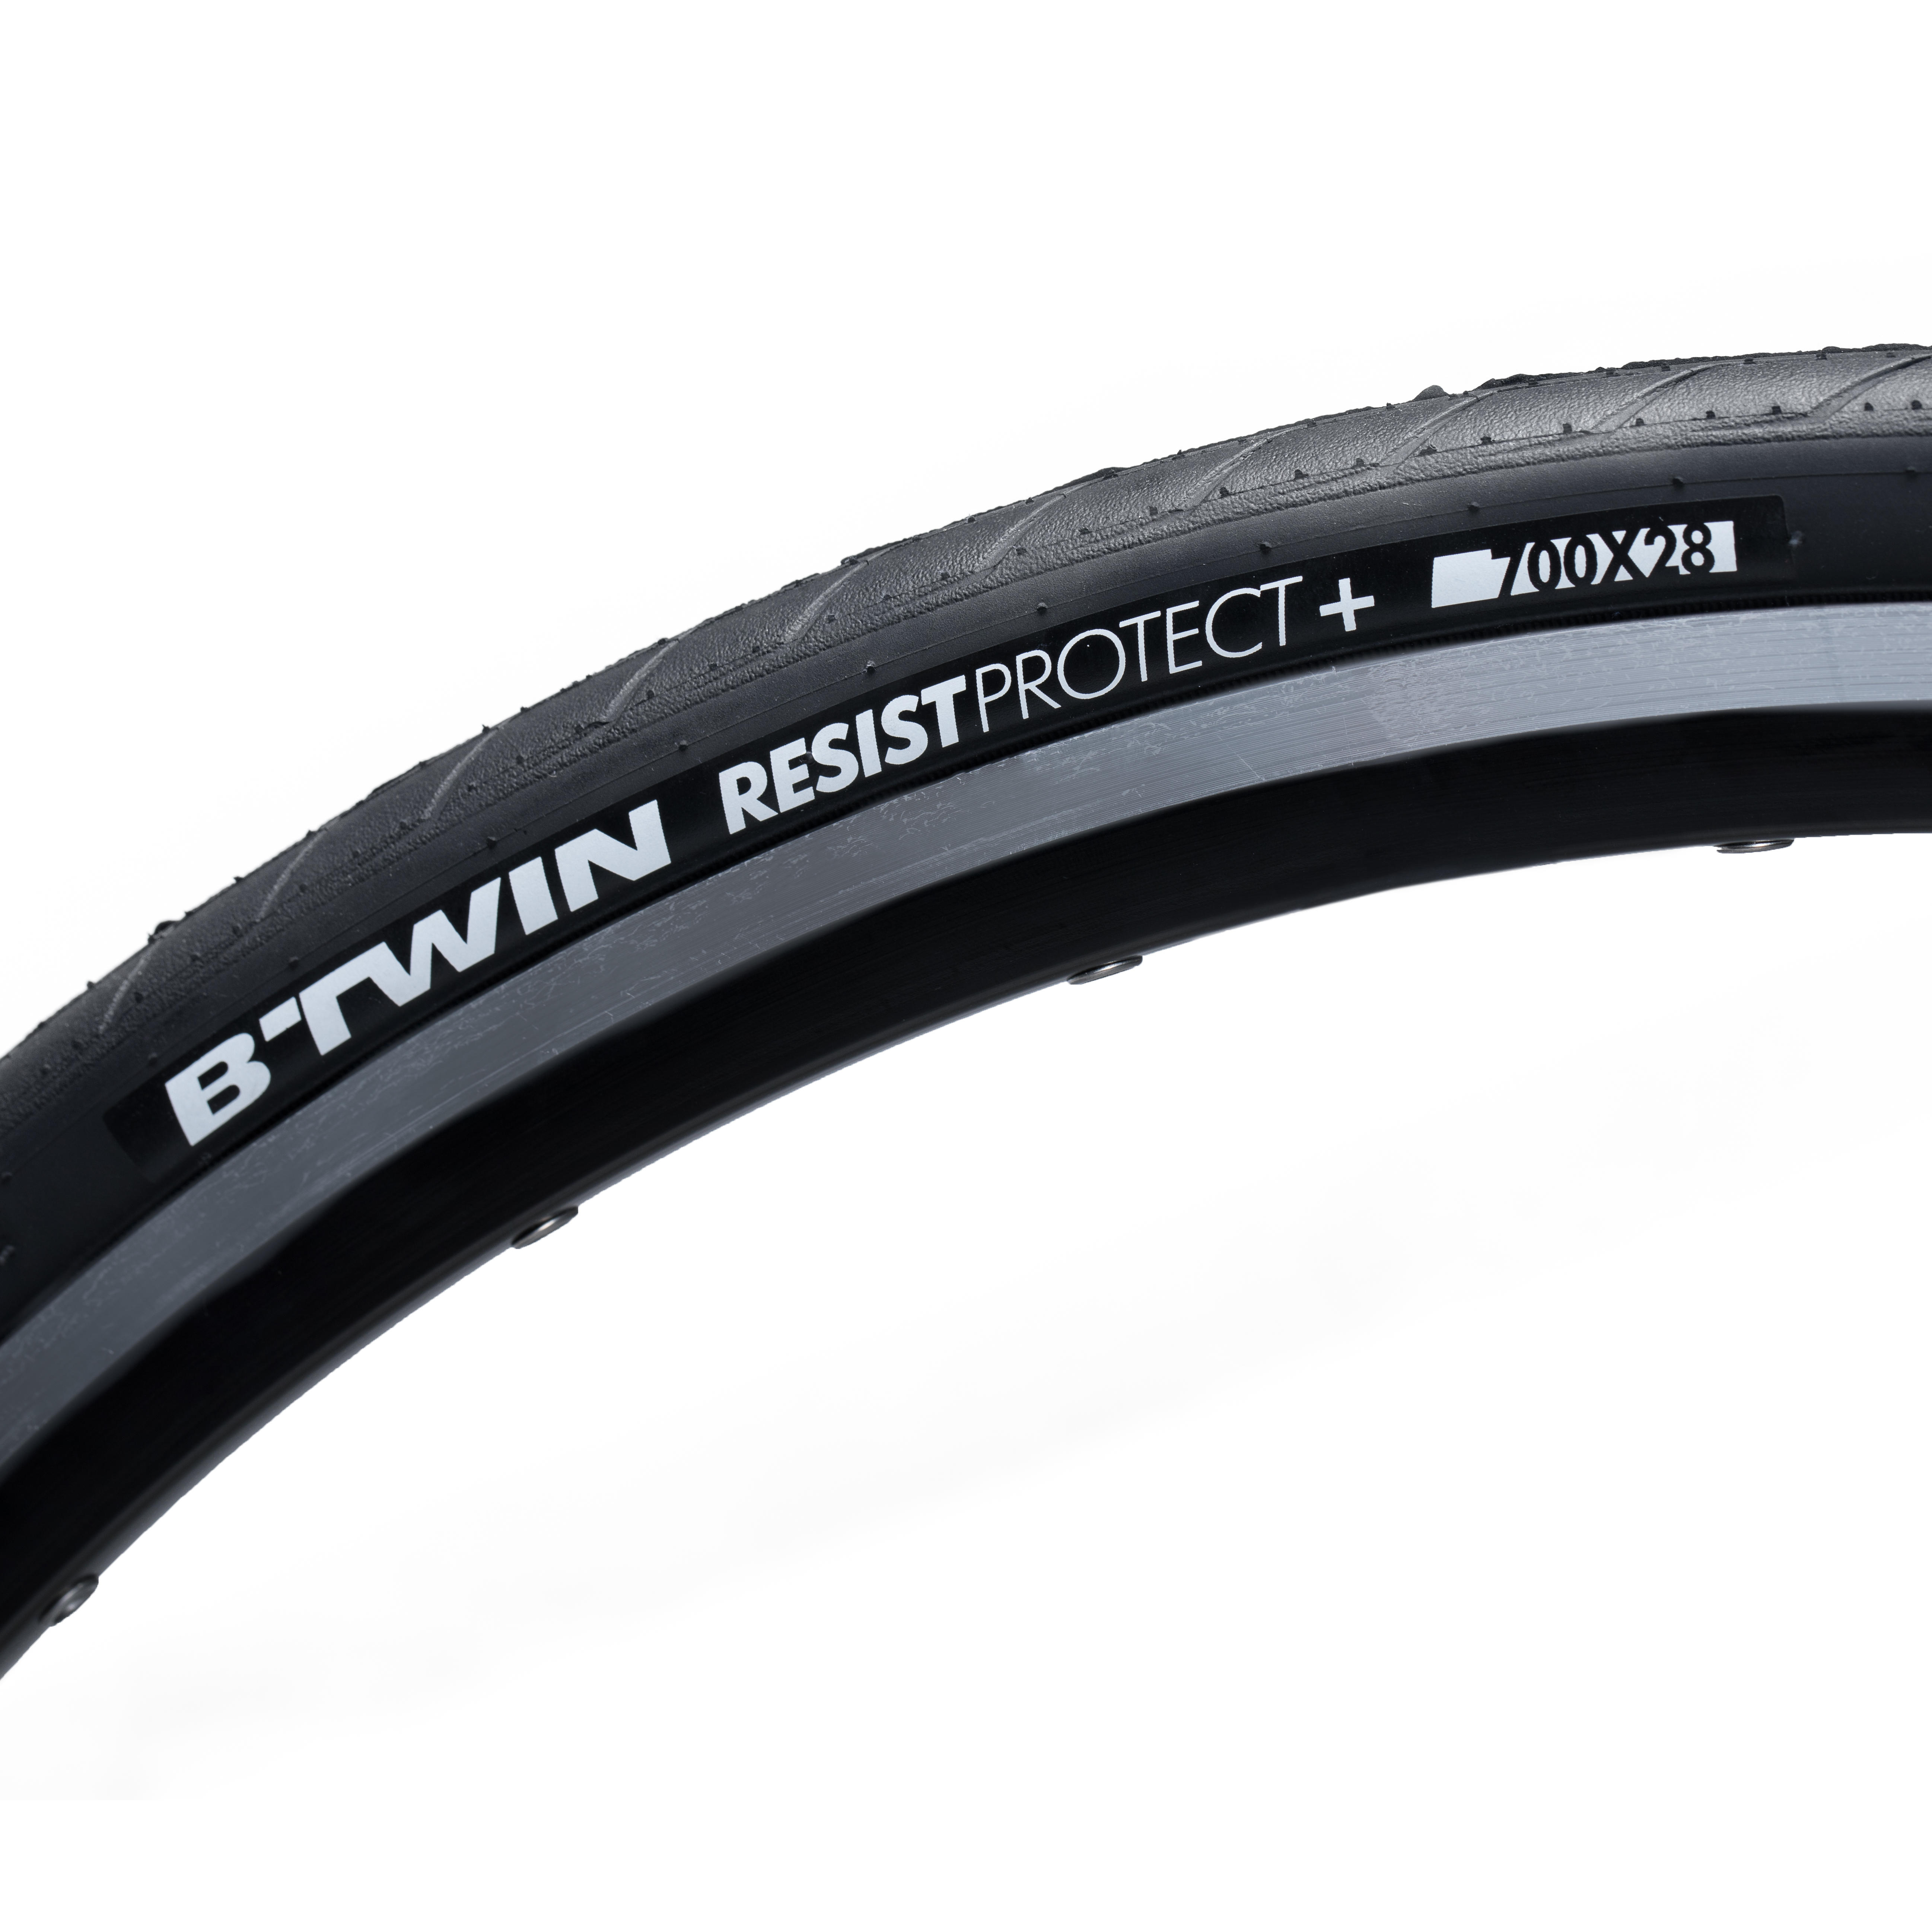 Resist 9 Protect 700x28 Flex Bead Tyre 